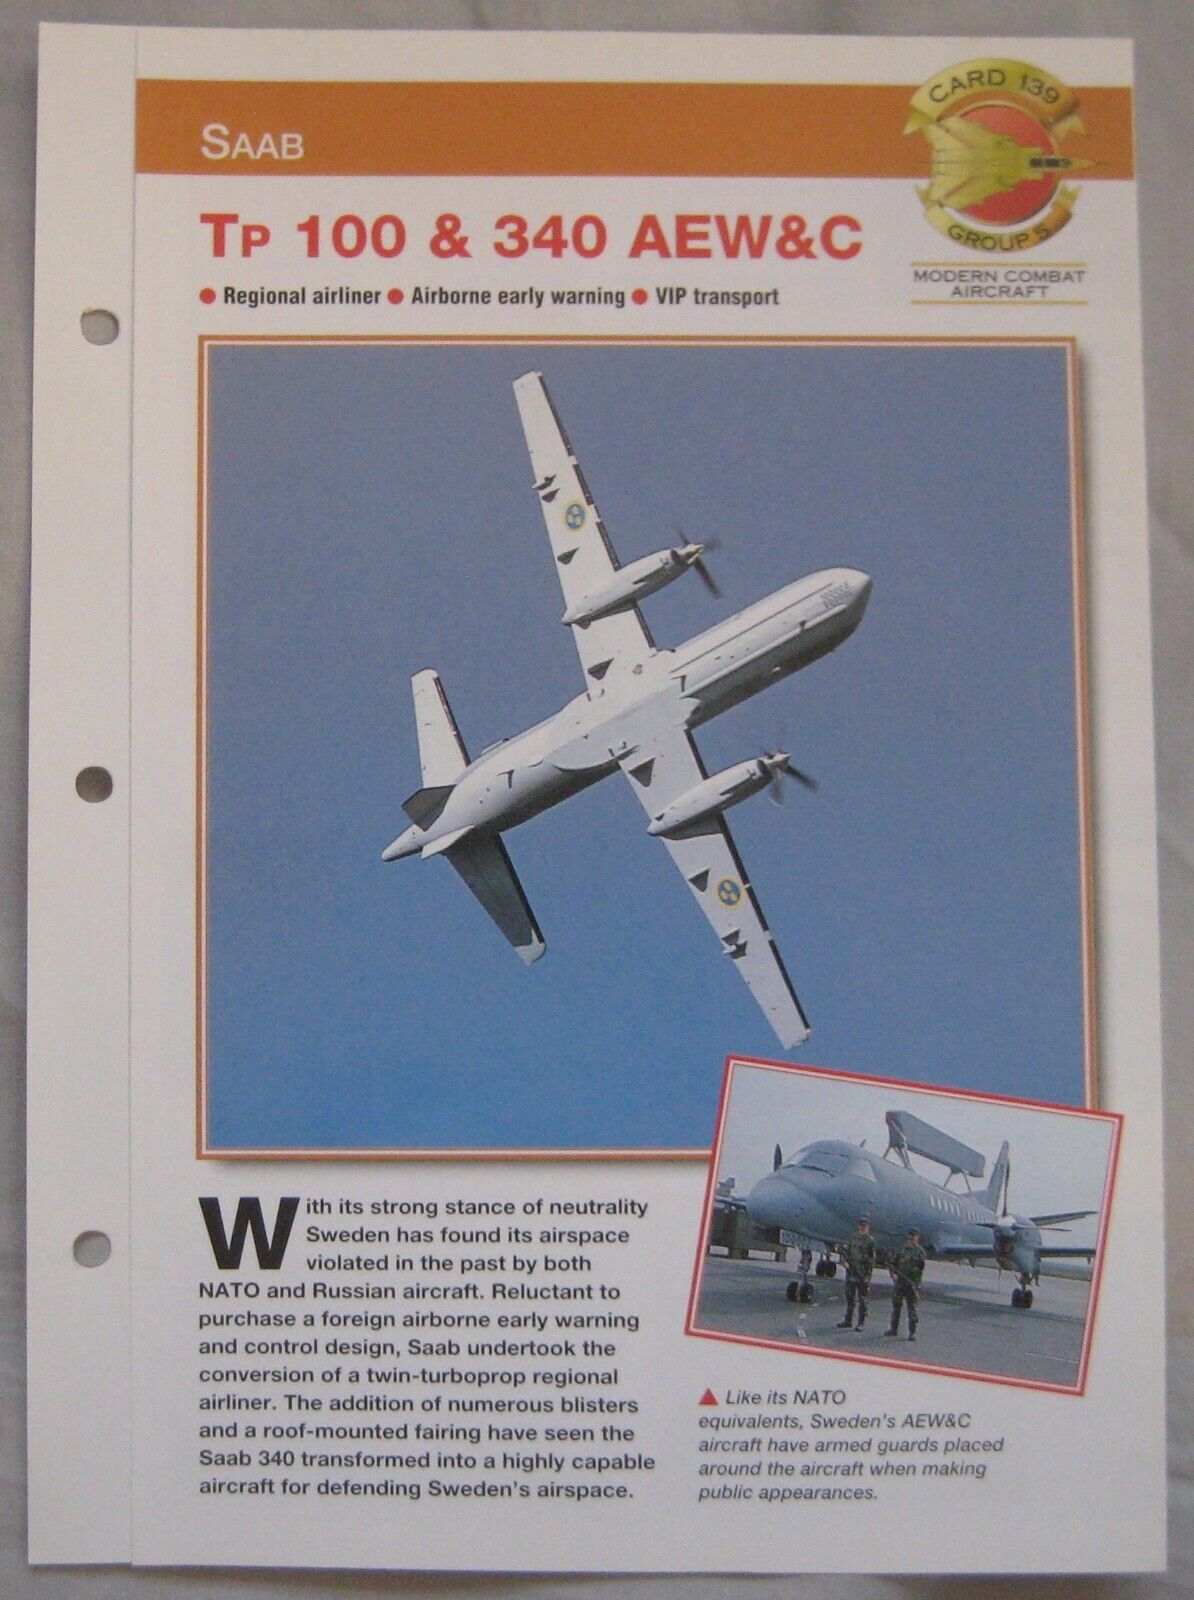 Aircraft of the World Card 139 , Group 5 - Saab Tp 100 & 340 AEW&C